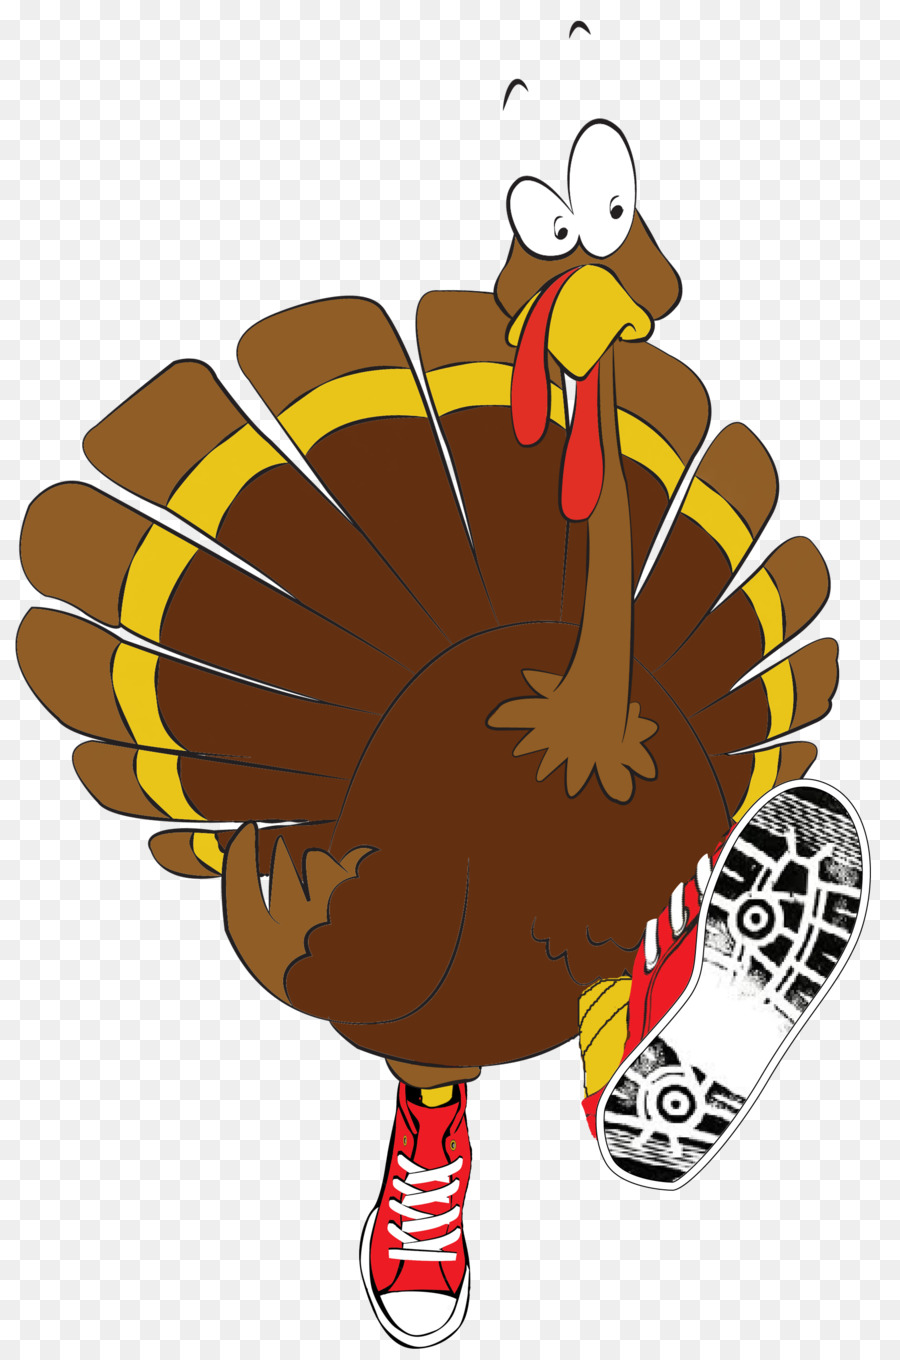 Image Illustration Gobble Wobble 5K Domestic turkey Turkey trot - gobble graphic png download - 1852*2792 - Free Transparent Domestic Turkey png Download.